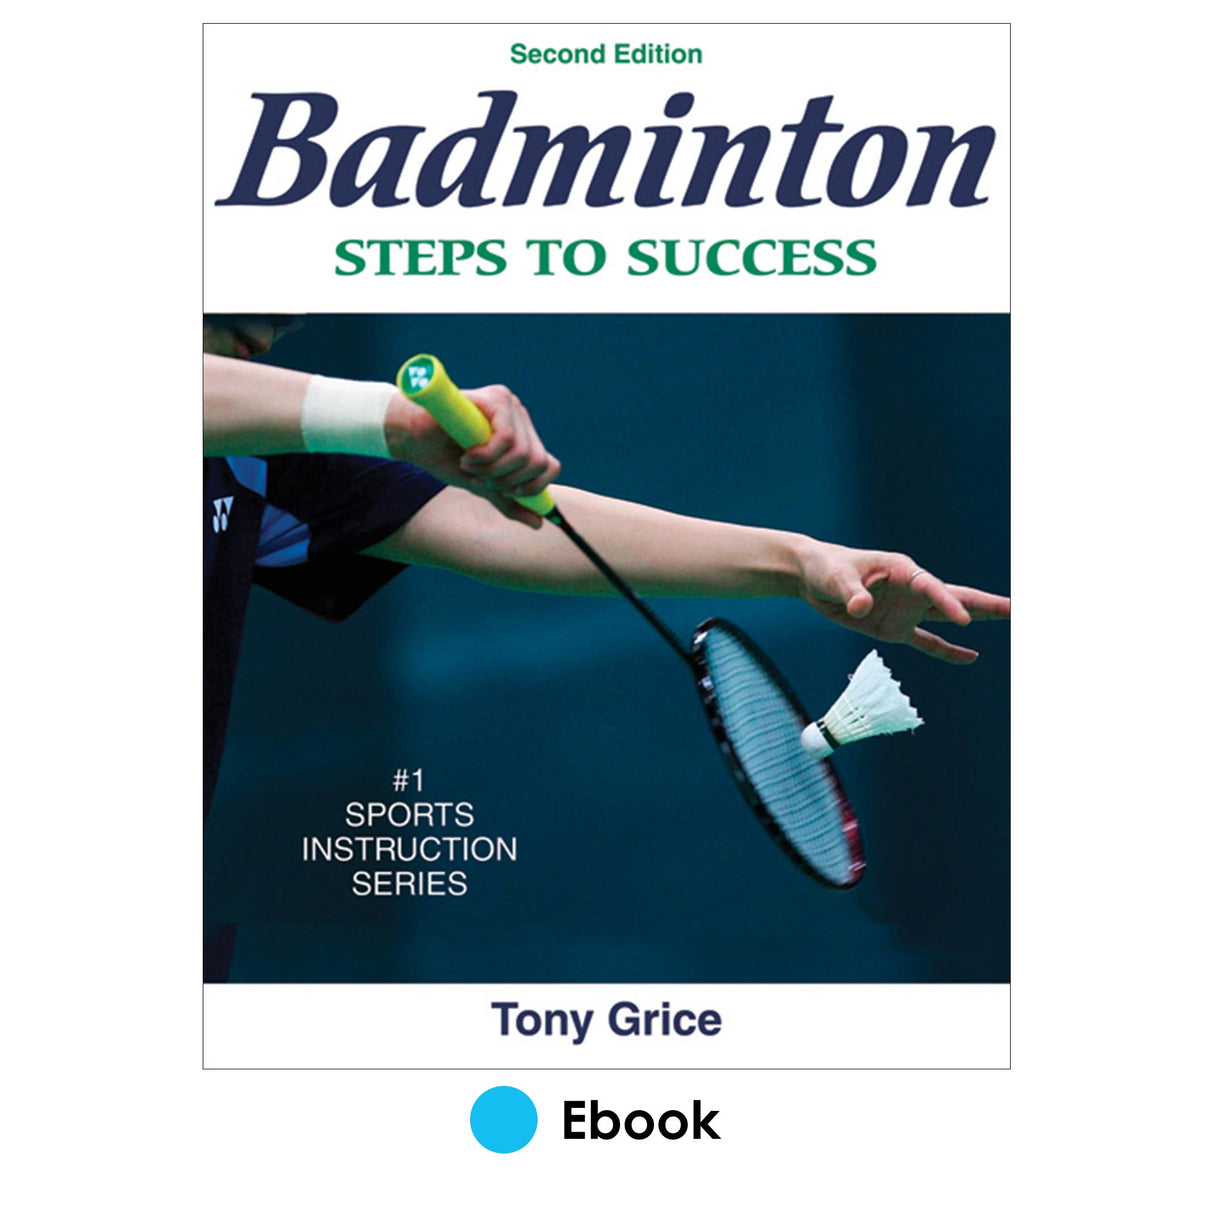 Badminton 2nd Edition PDF